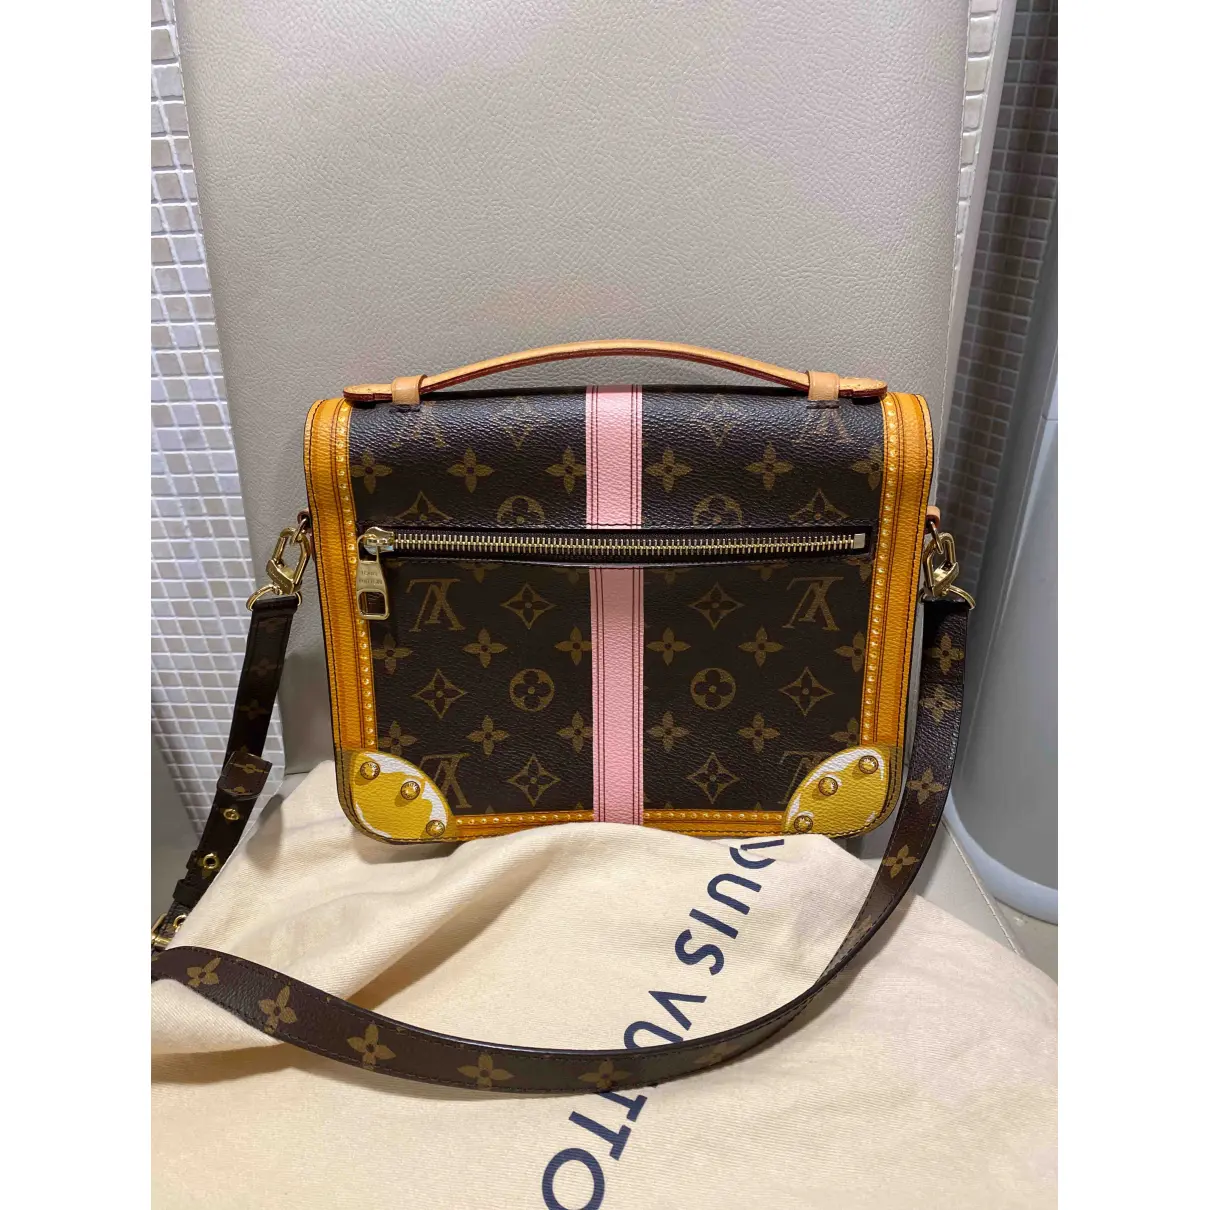 Buy Louis Vuitton Metis leather handbag online